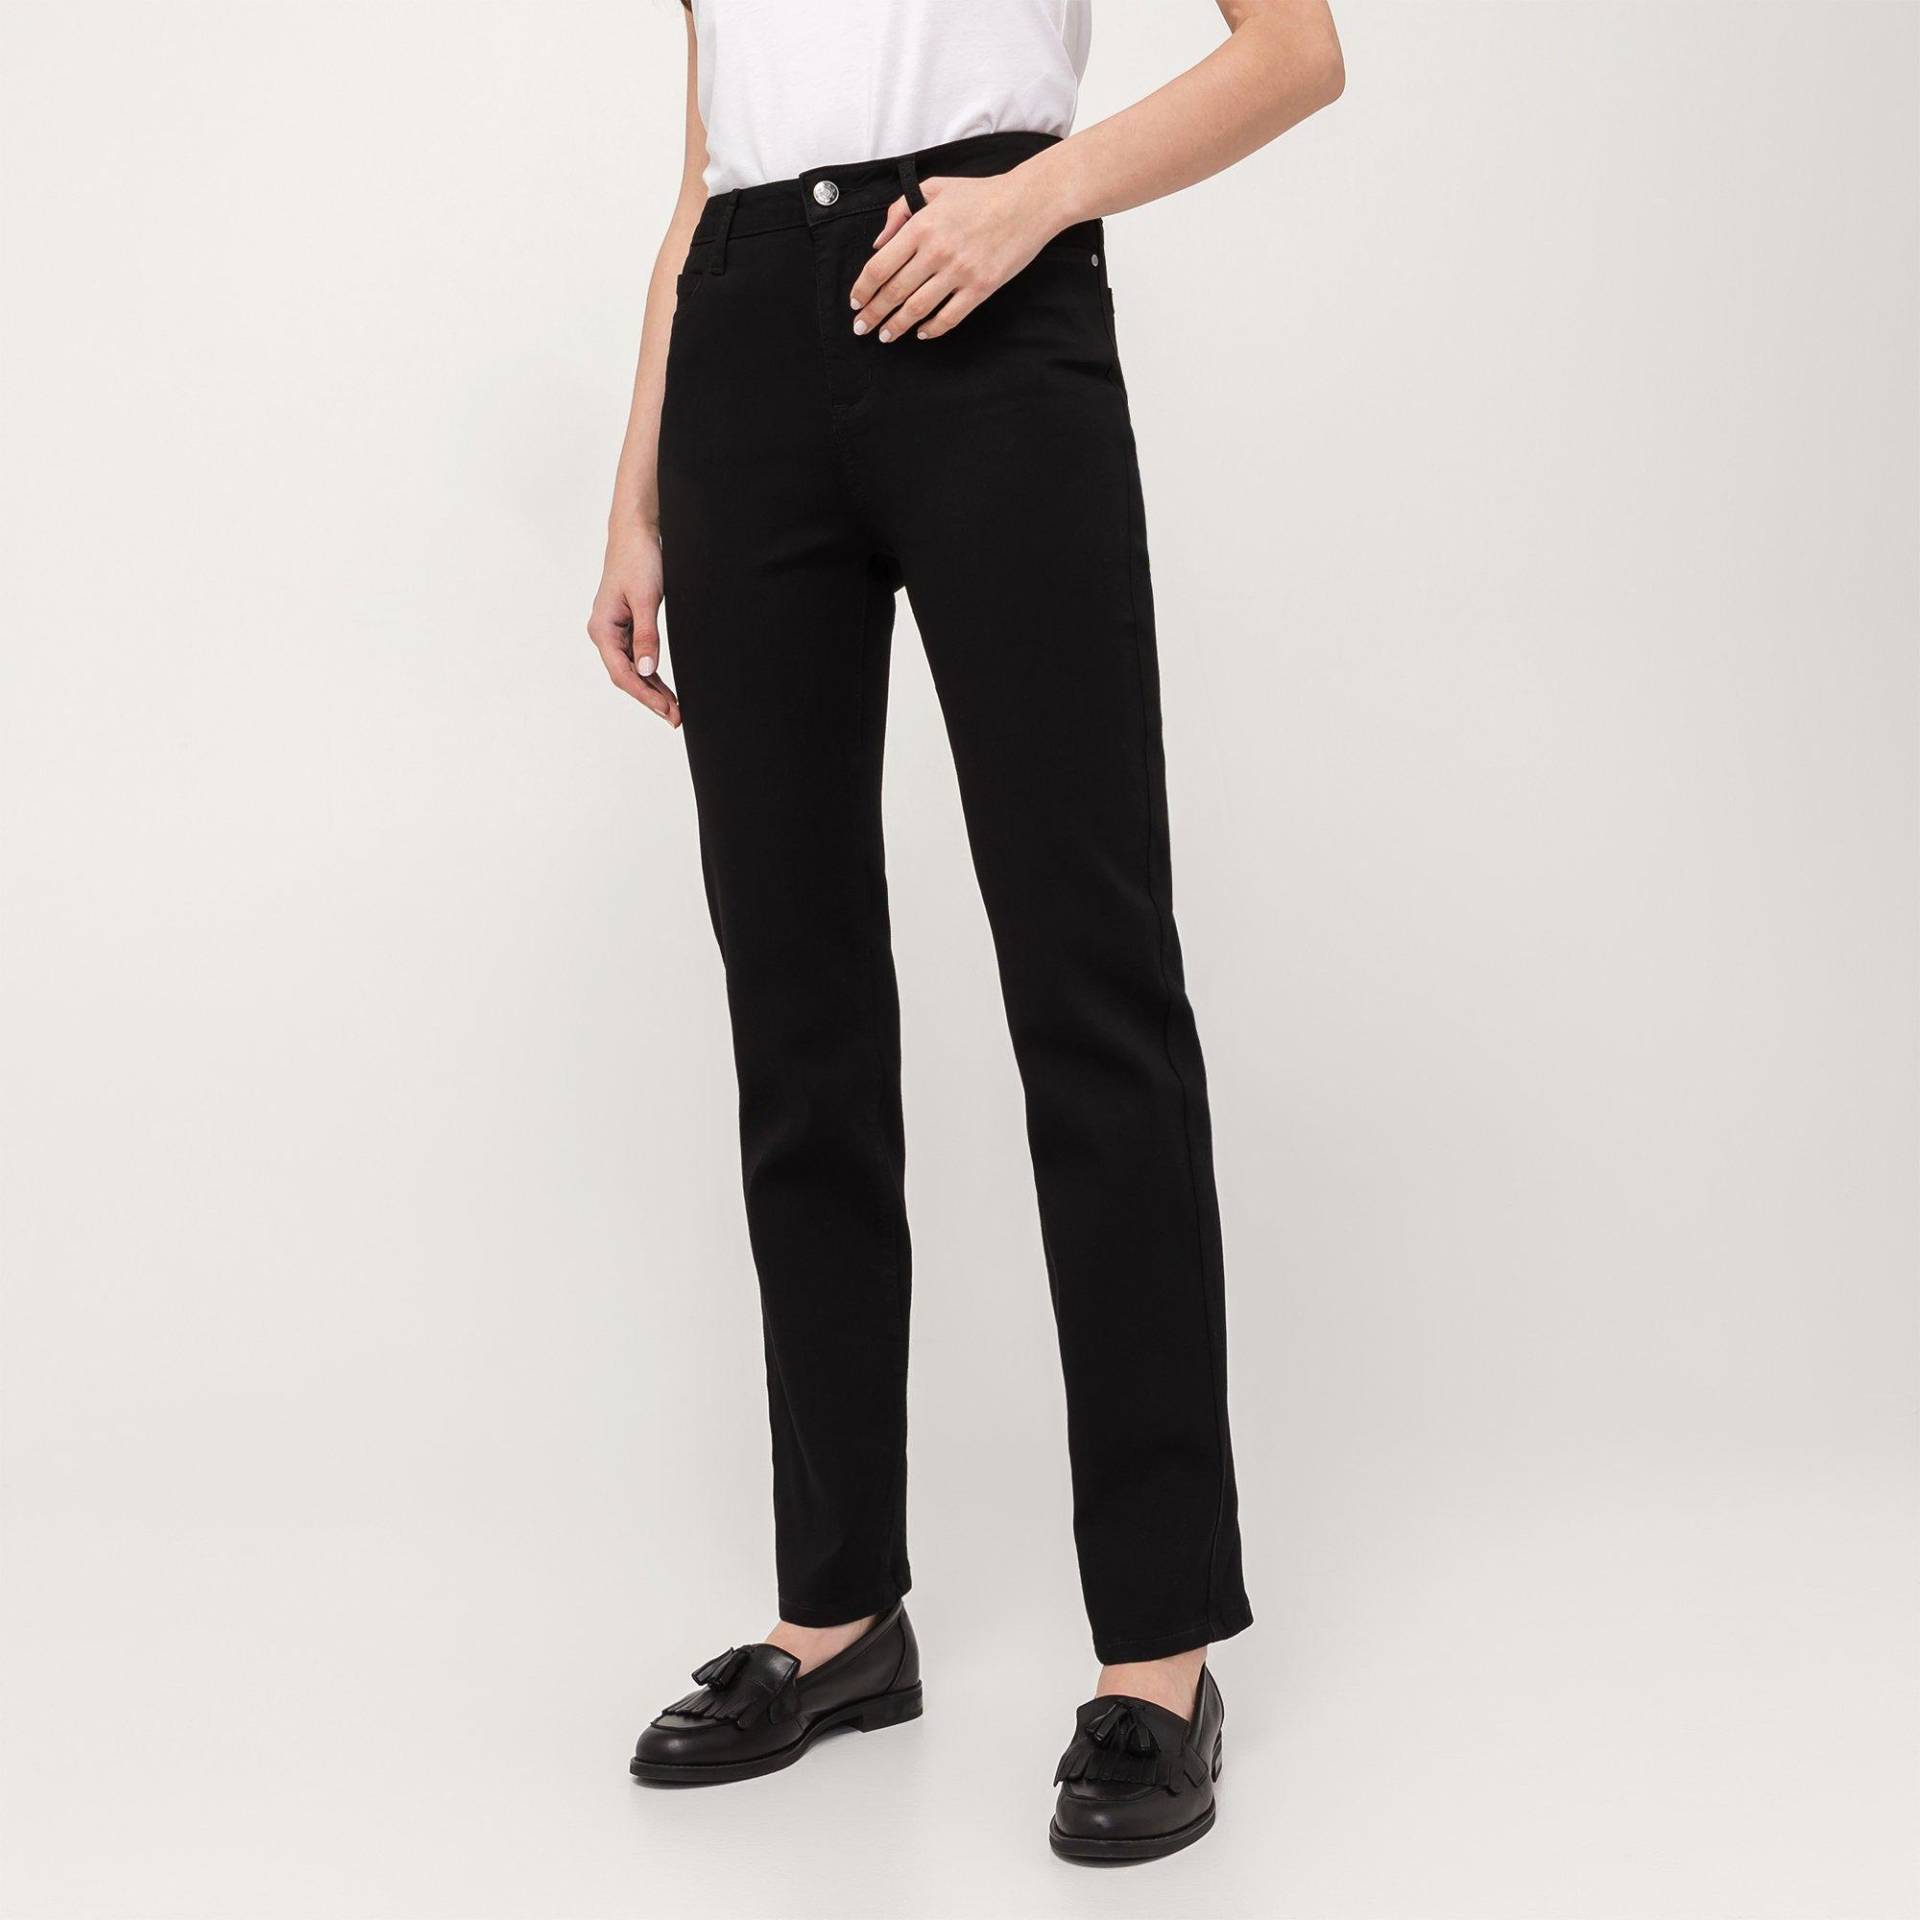 Jeans, Straight Leg Fit Damen Black L30/W36 von Manor Woman